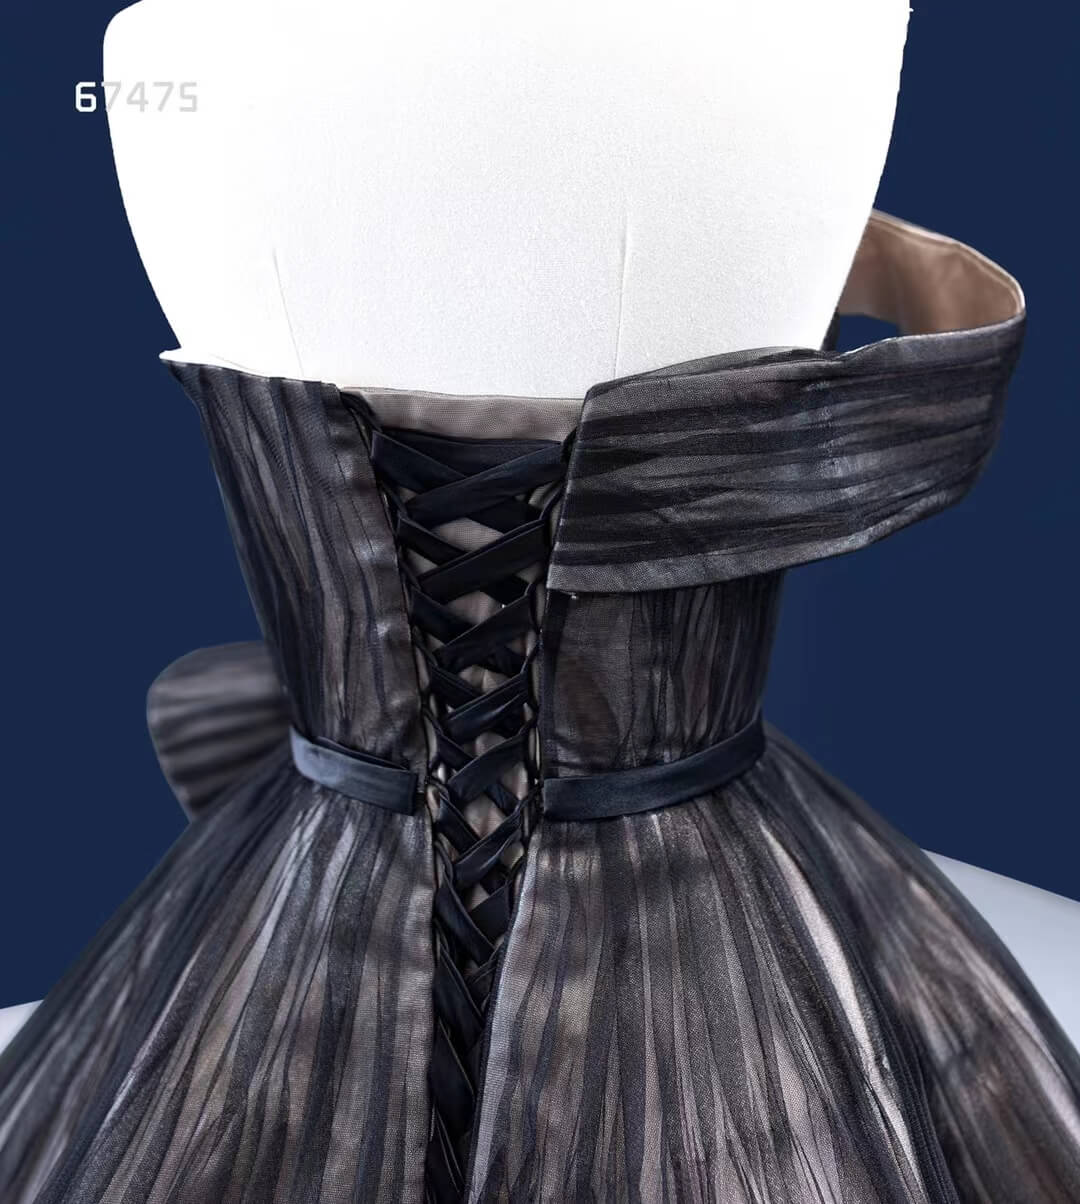 Asymmetric Black Wedding Dress Vintage Pageant Ball Gown One Shoulder 67475-Quinceanera Dresses-Viniodress-Viniodress